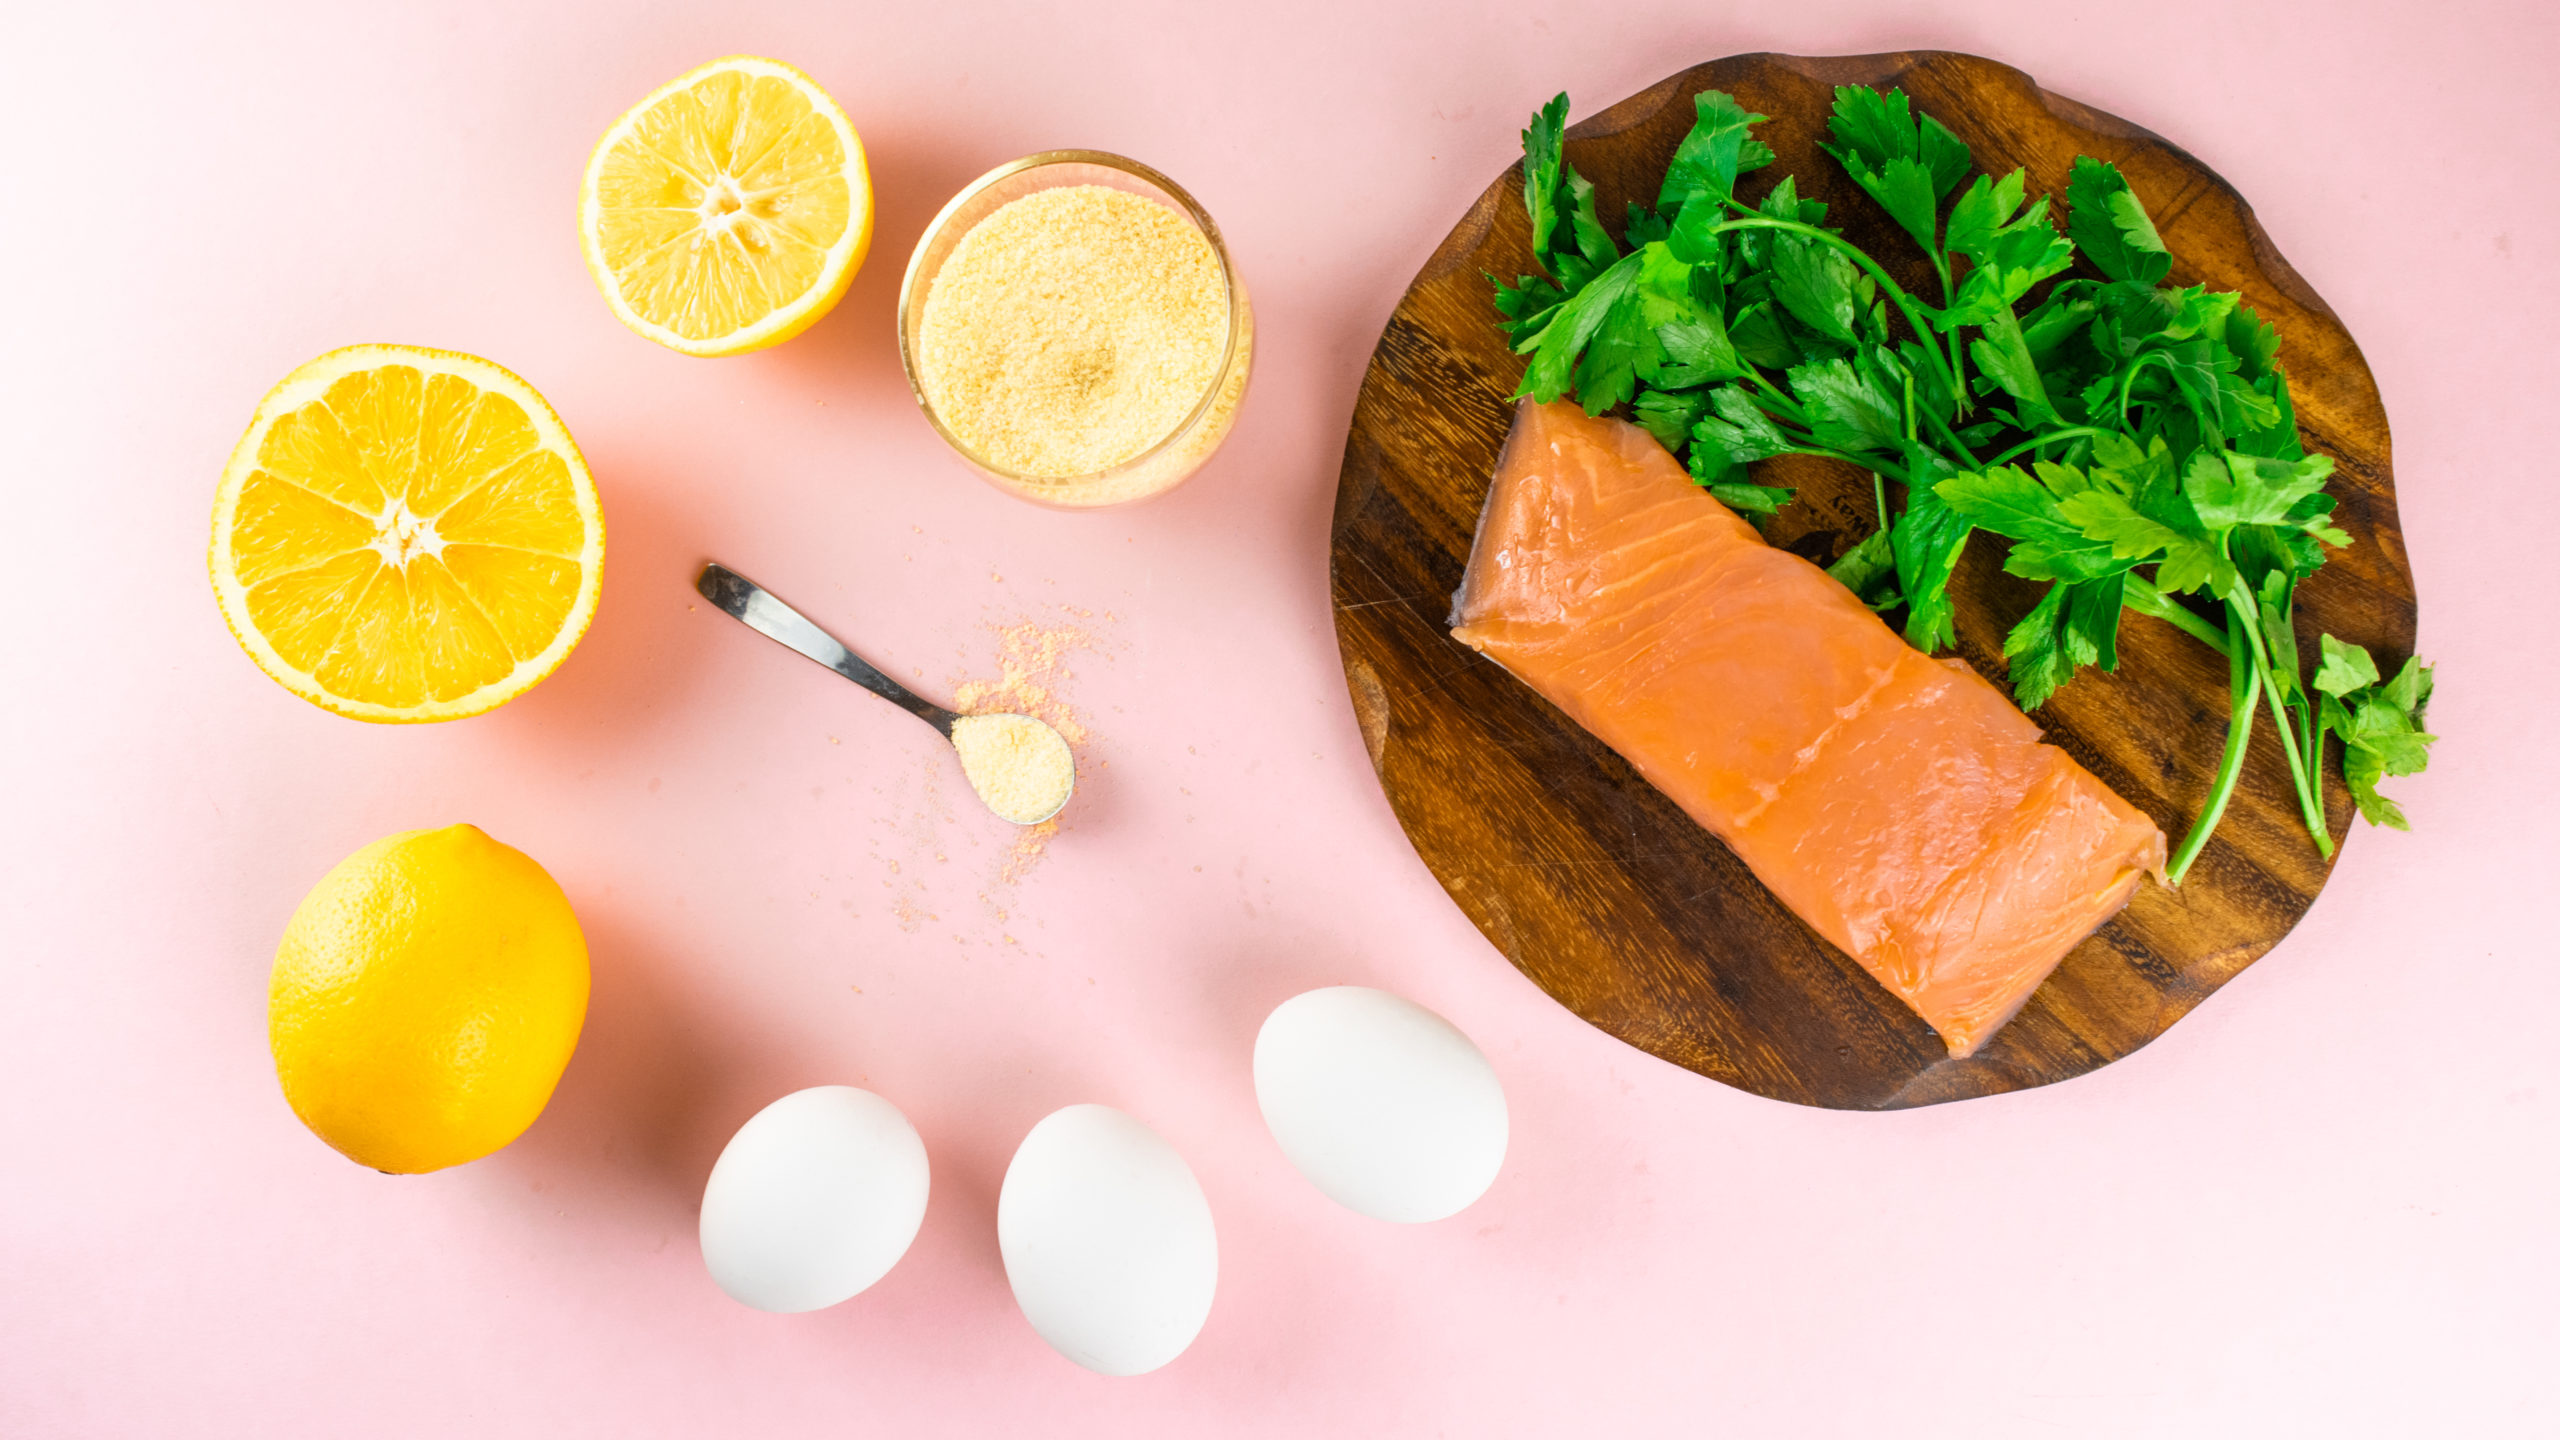 foods containing collagen benefits salmon eggs citrus peptides supplement